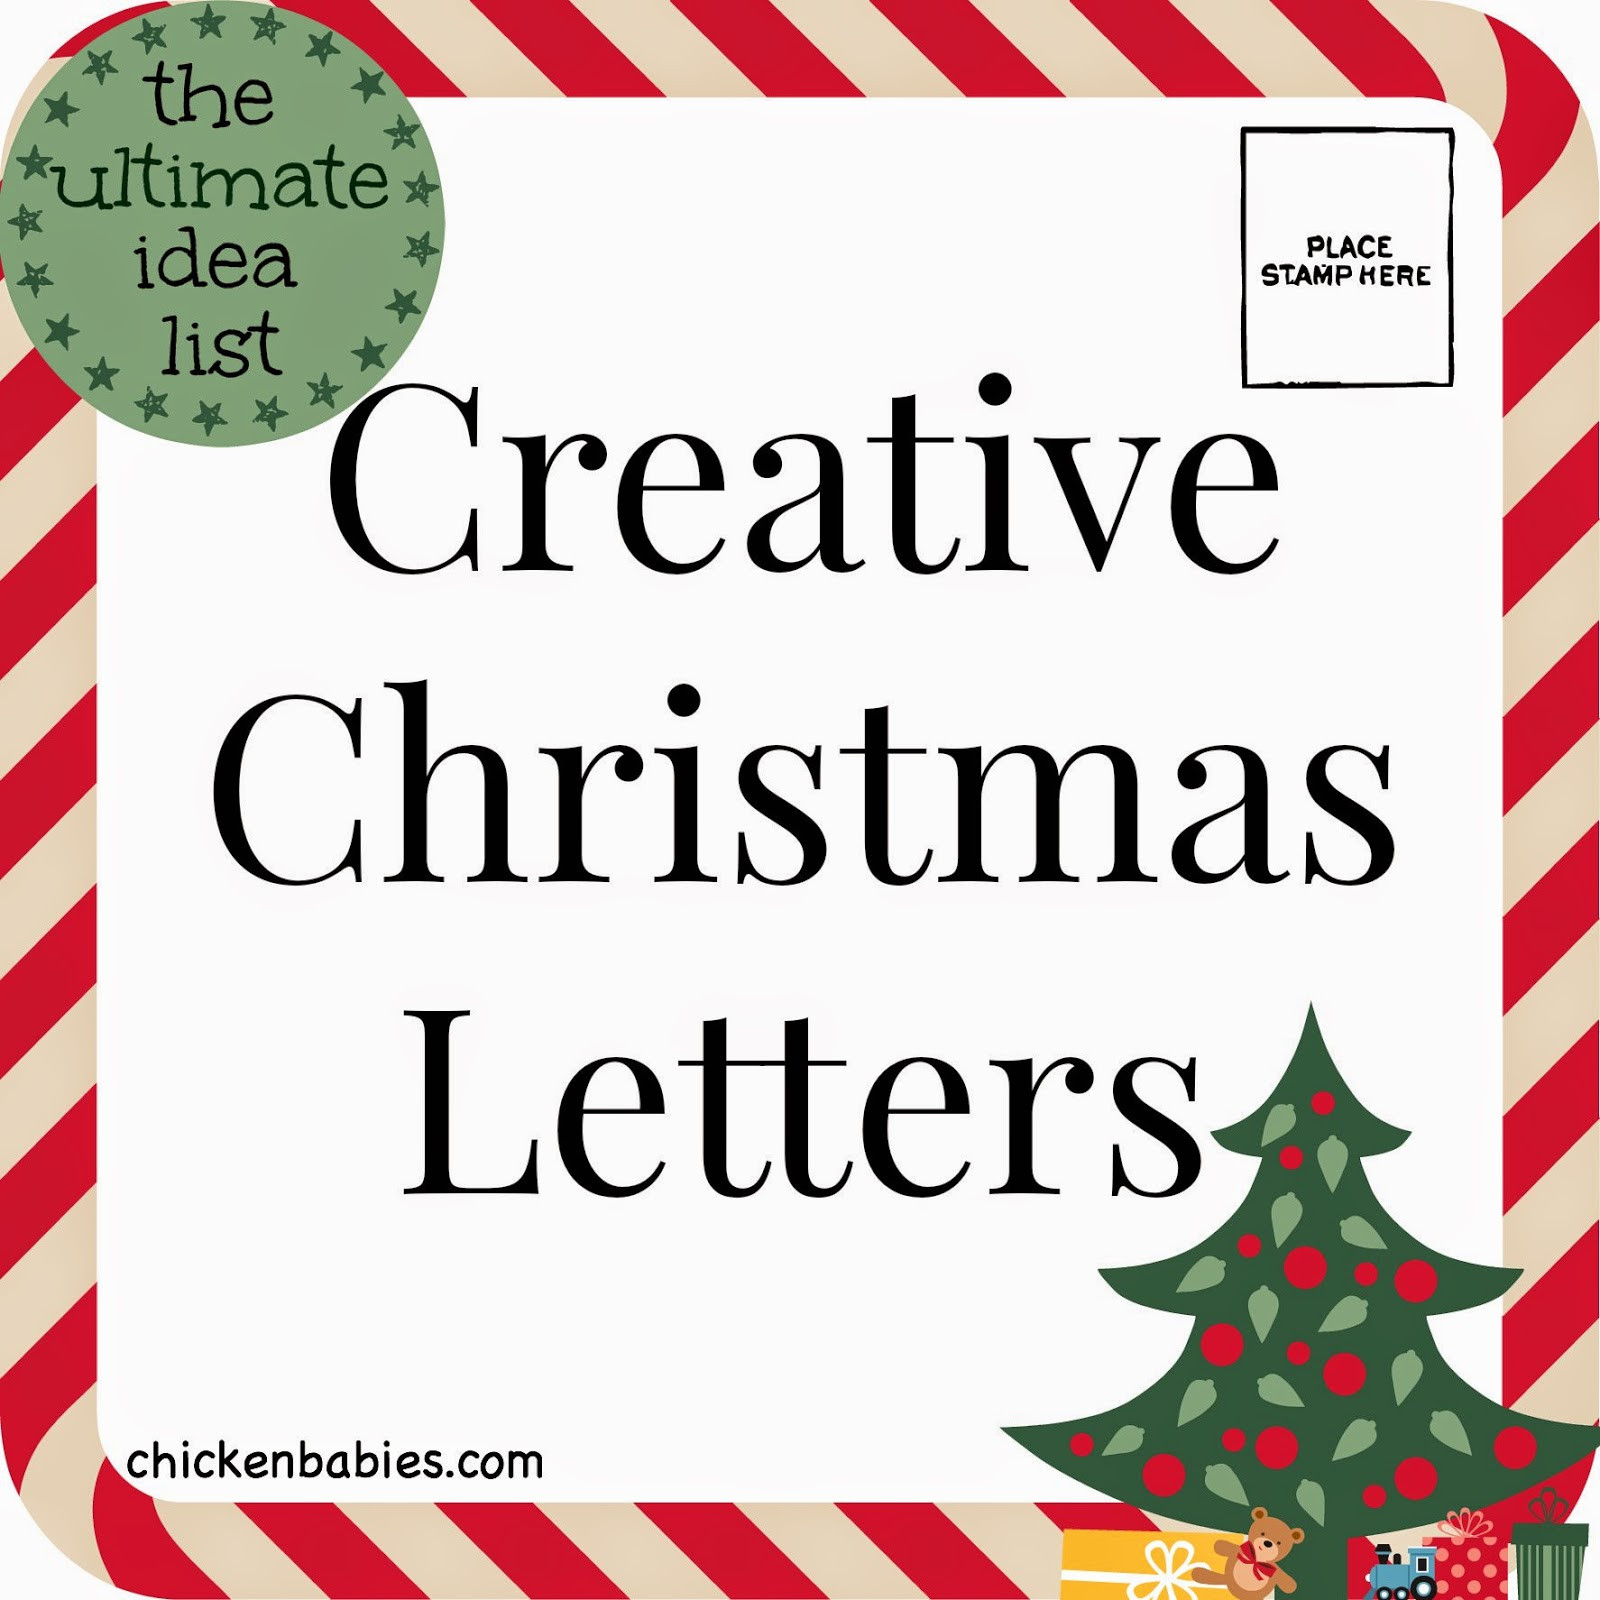 Creative Christmas Letter Ideas
 chicken babies Creative Christmas Letters